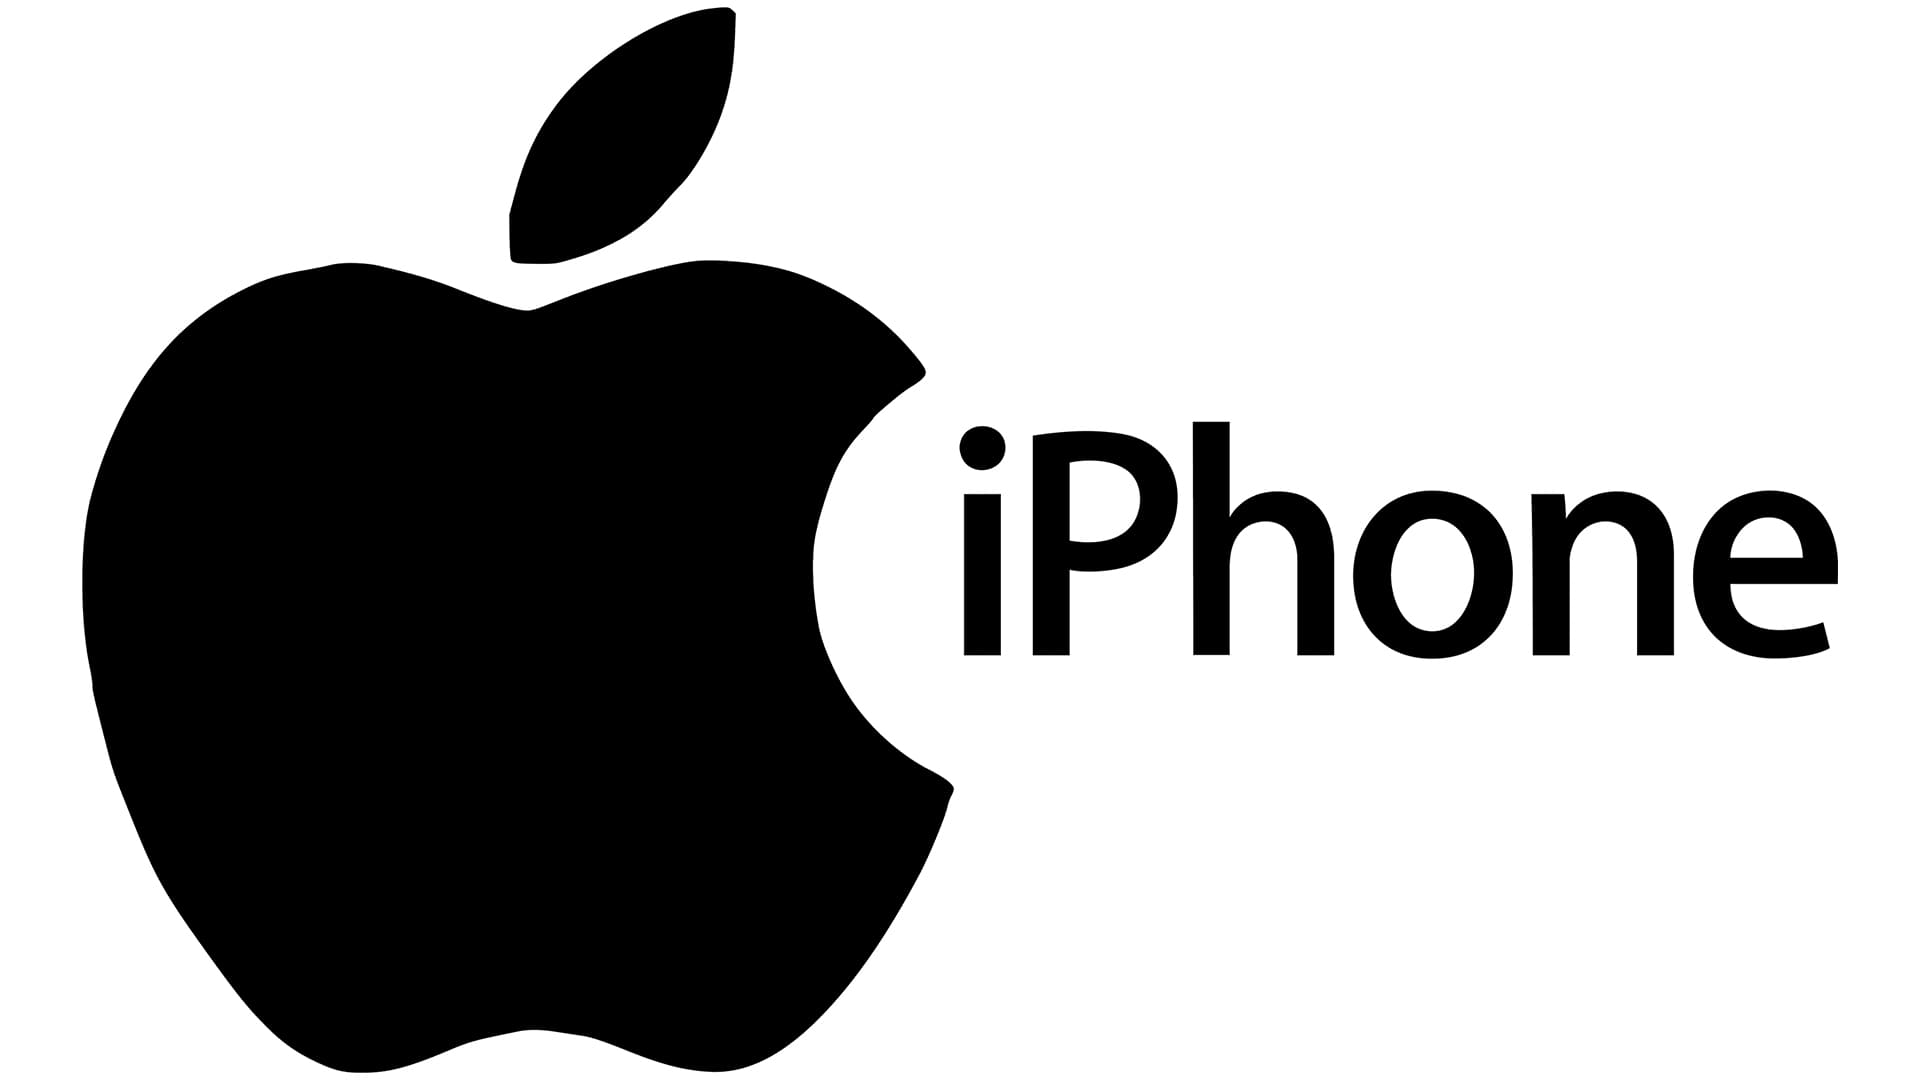 iphone logo png